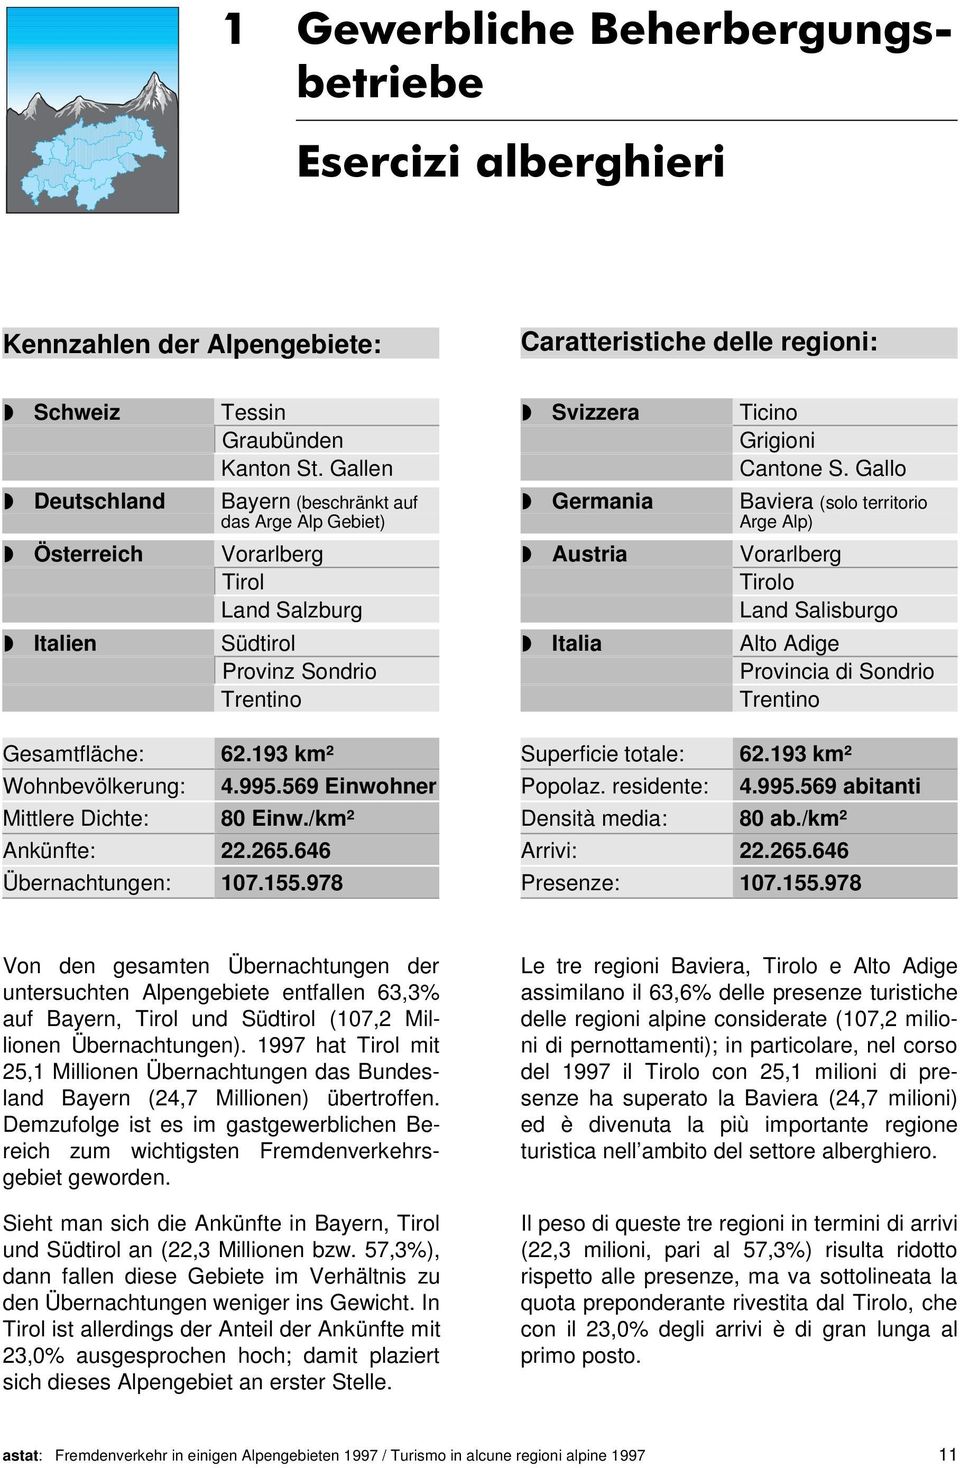 Italien Südtirol w Italia Alto Adige Provinz Sondrio Provincia di Sondrio Trentino Trentino Gesamtfläche: 62.193 km² Superficie totale: 62.193 km² Wohnbevölkerung: 4.995.569 Einwohner Popolaz.